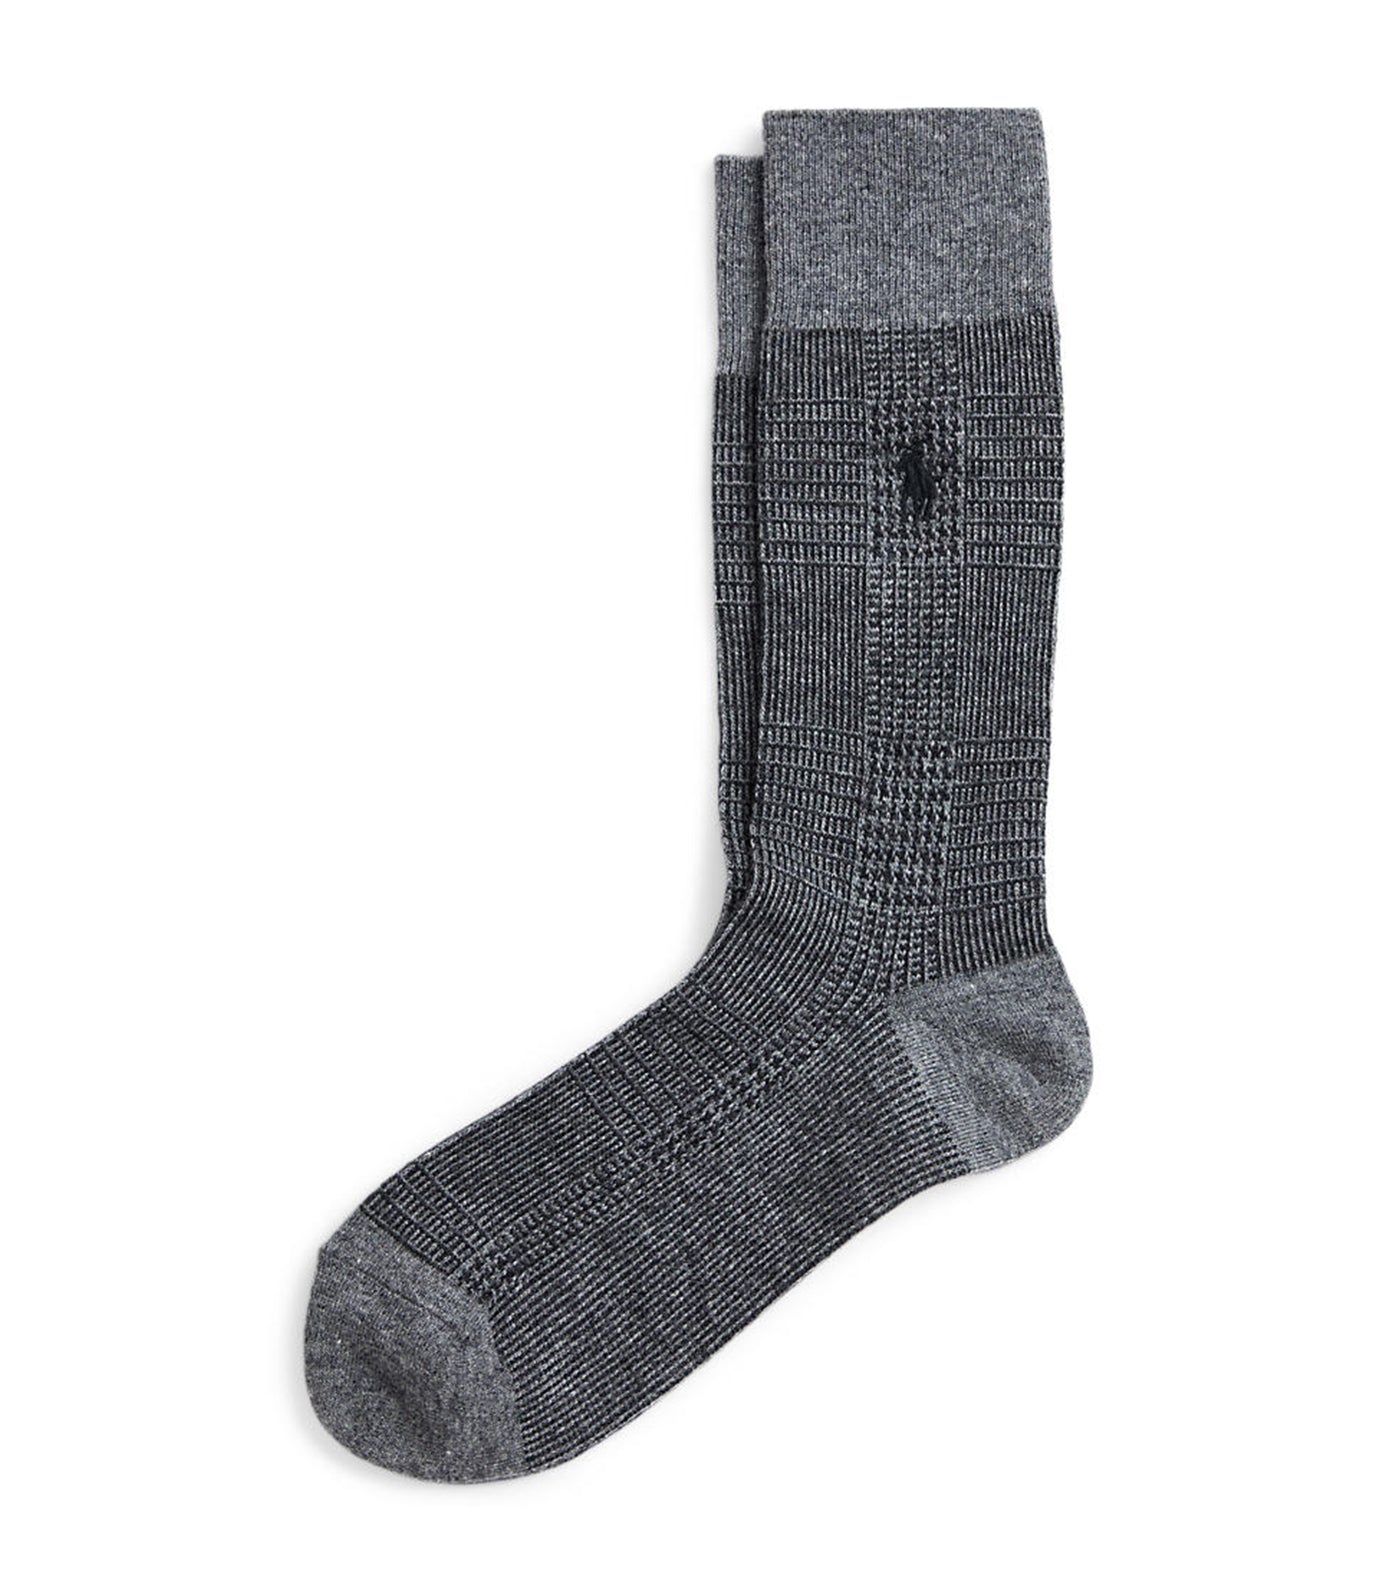 Men's Houndstooth Trouser Socks Foster Gray Heather